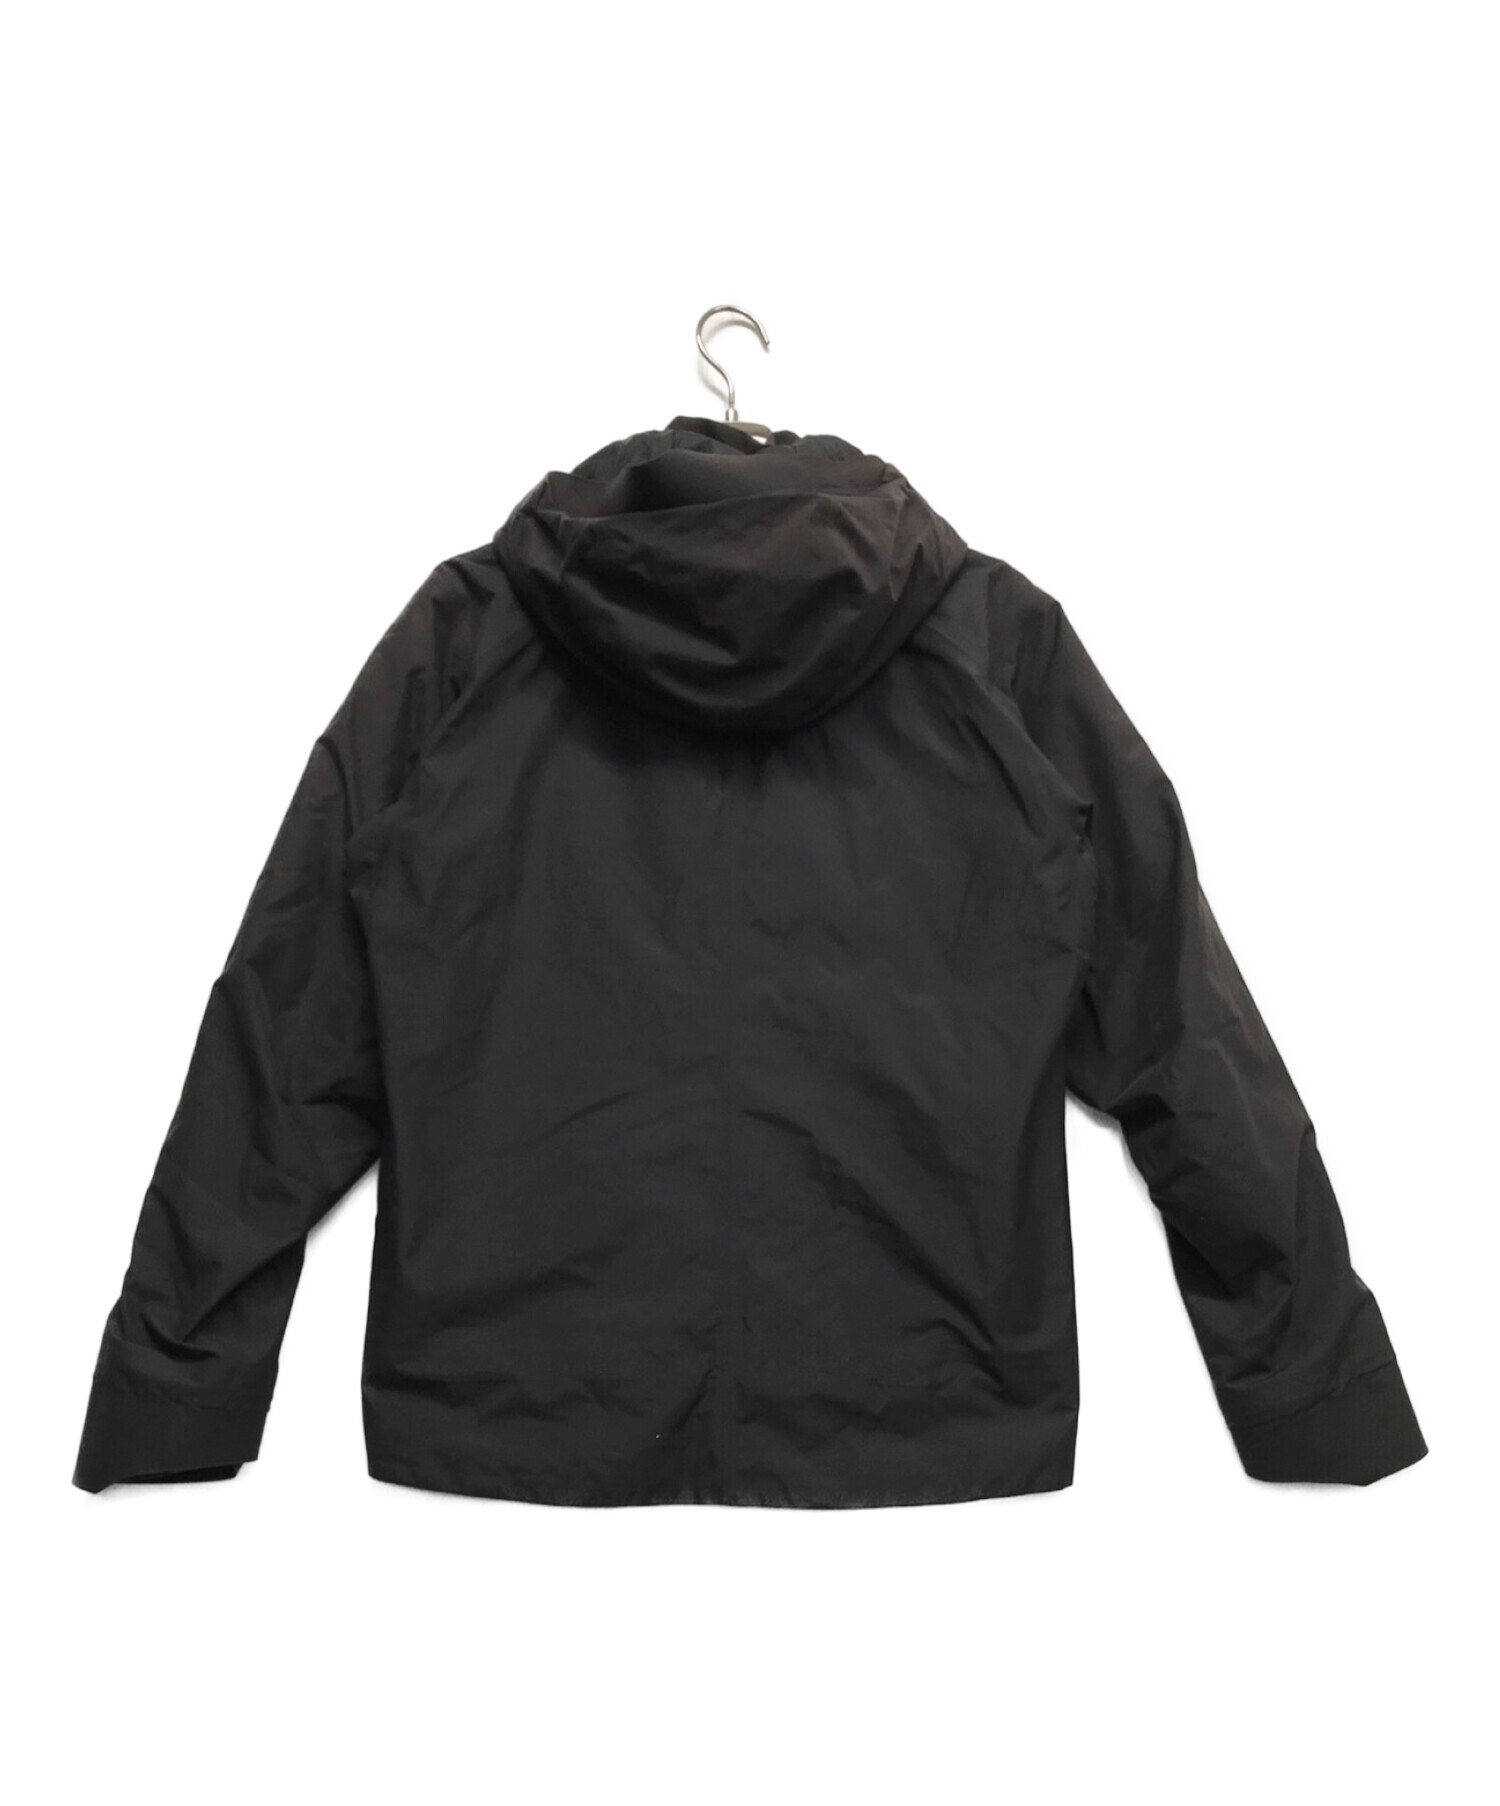 ARC'TERYX (アークテリクス) VEILANCE Node IS jacket ブラック サイズ:SM